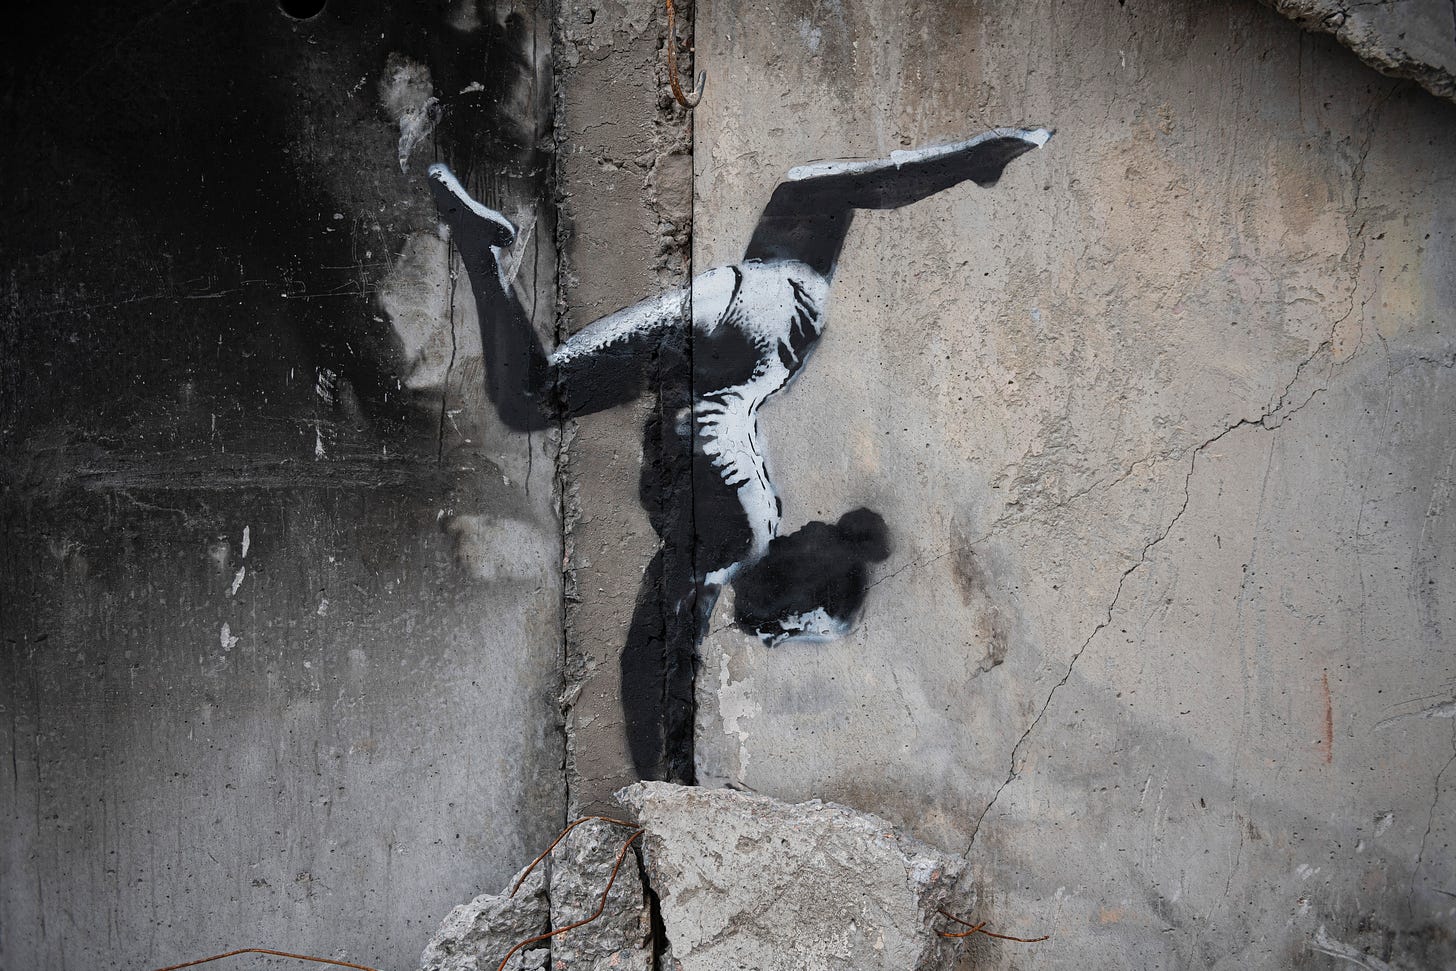 Banksy art appears amid war ruins in Ukraine | DC News Now